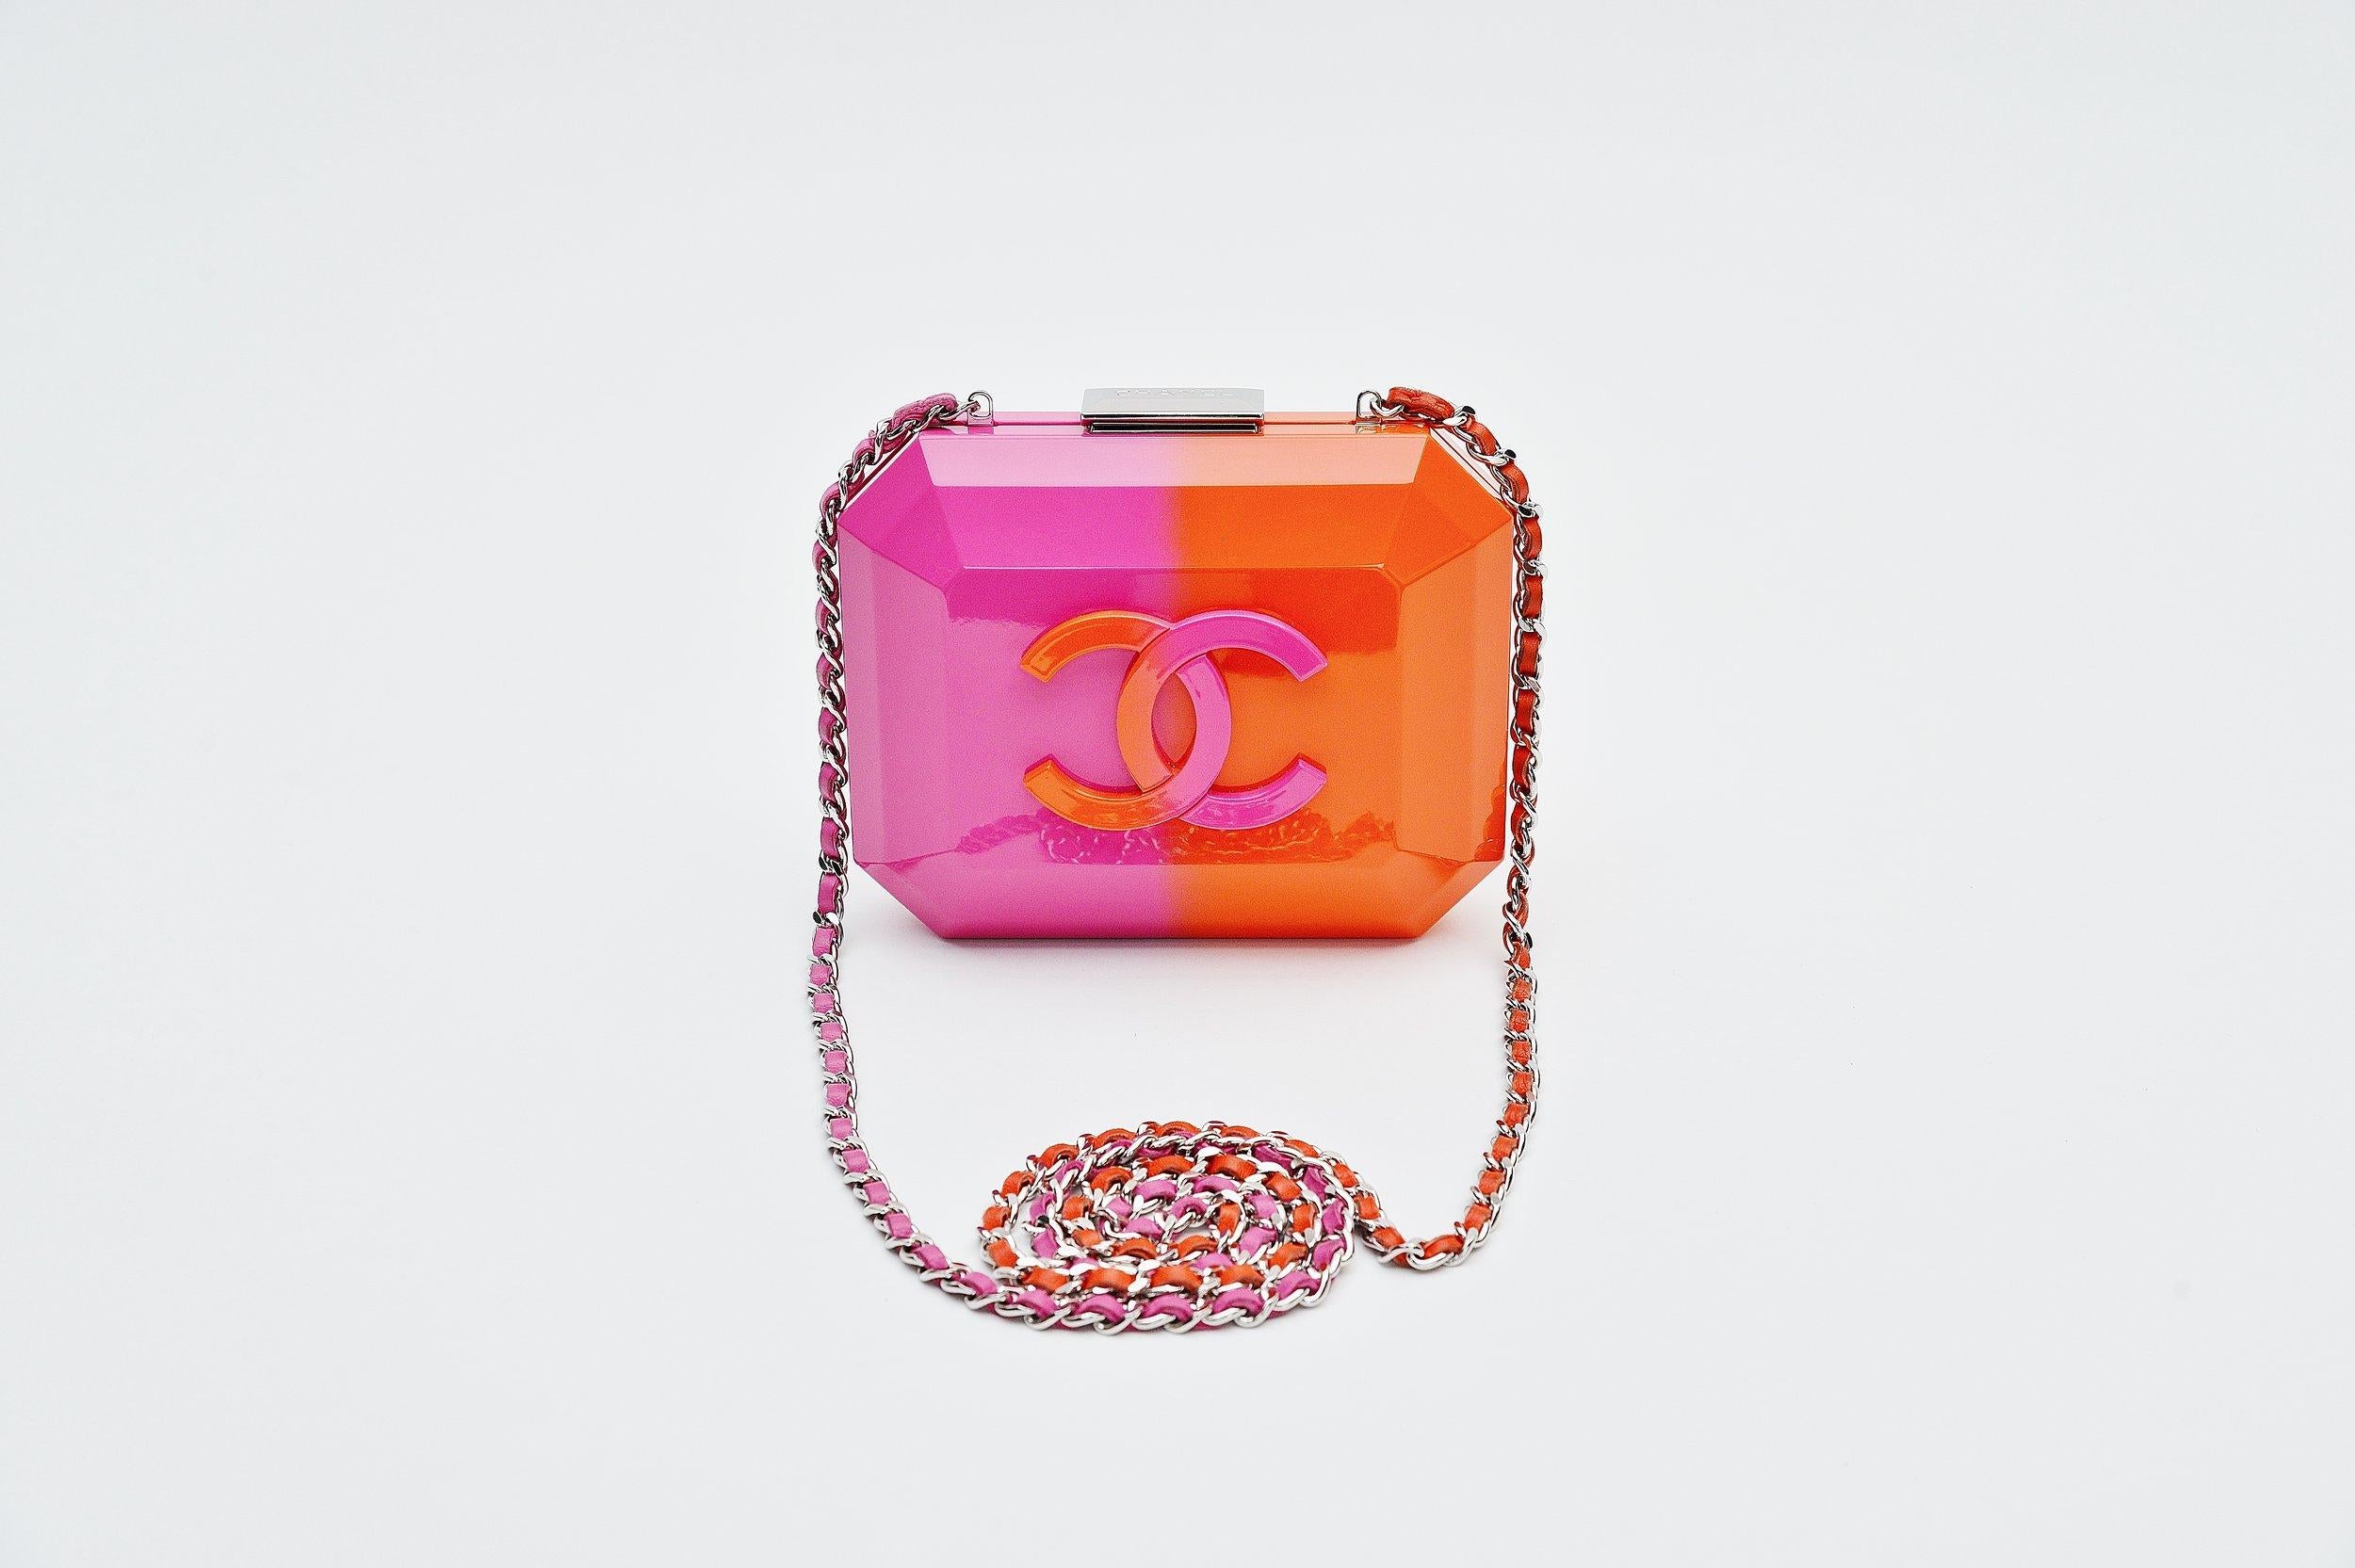 Women's Chanel Runway Minaudière Ombre Pink & Orange Hard Shell Handbag Clutch